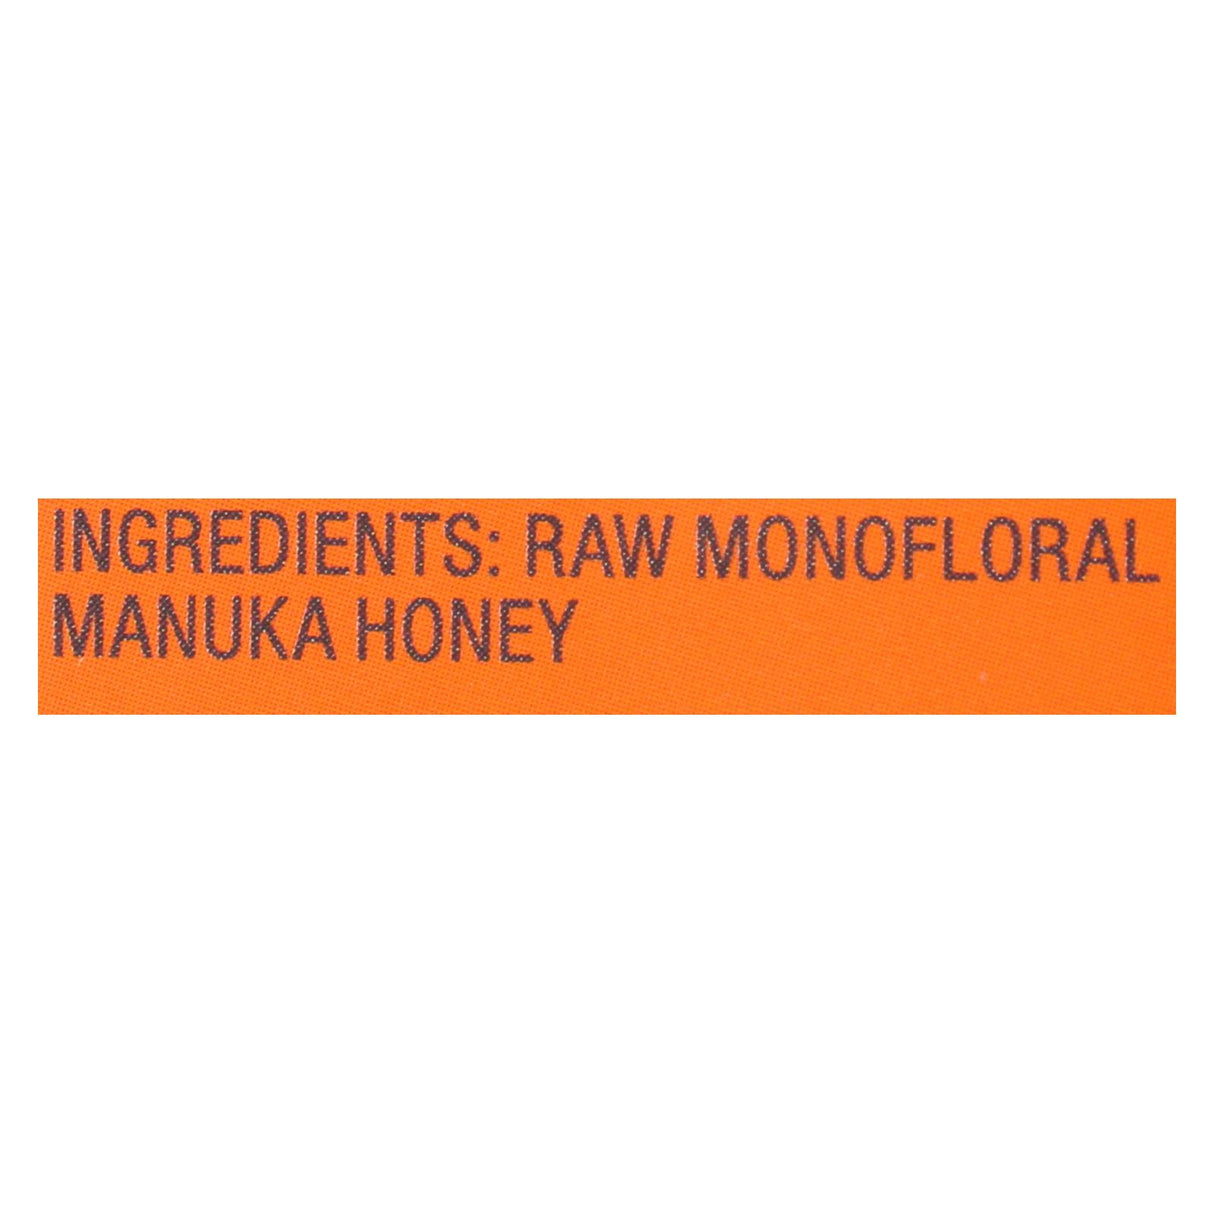 Wedderspoon Manuka Honey KFactor 16, 17.6 Oz, Pack of 6 - Cozy Farm 